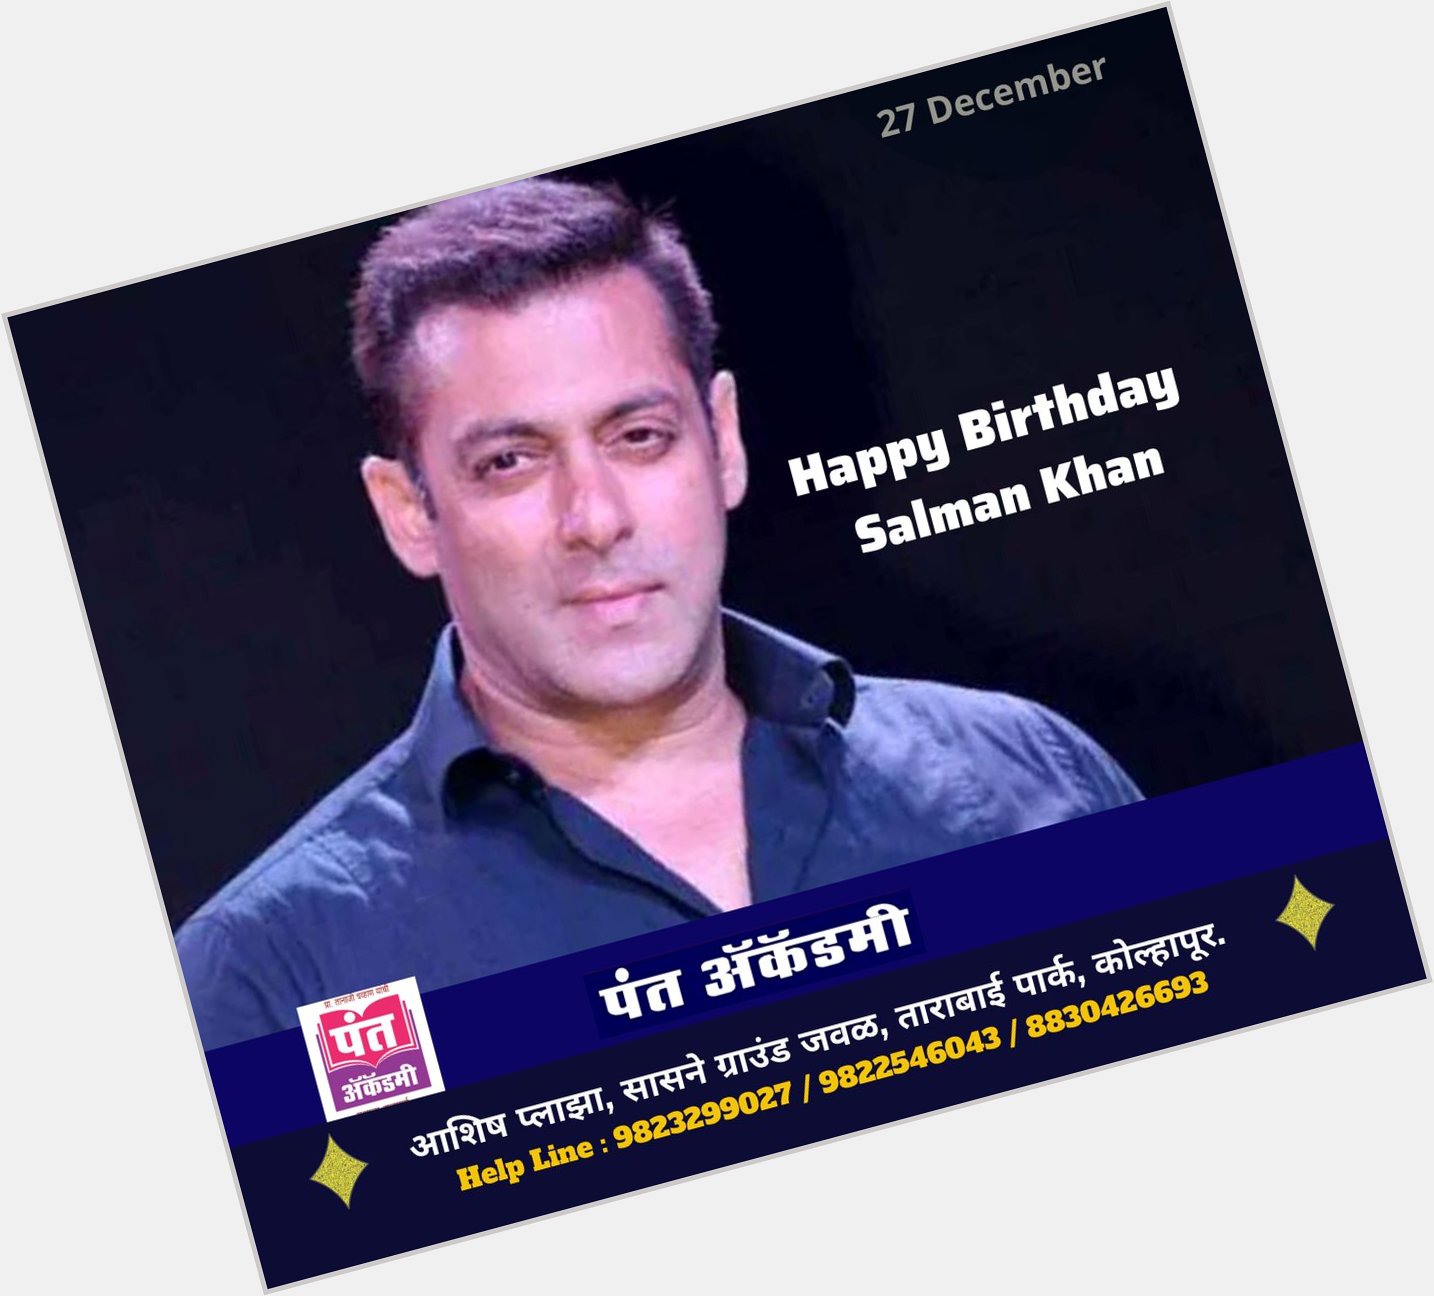 Happy Birthday, Salman Khan.
Wish you good Health and Happiness.  